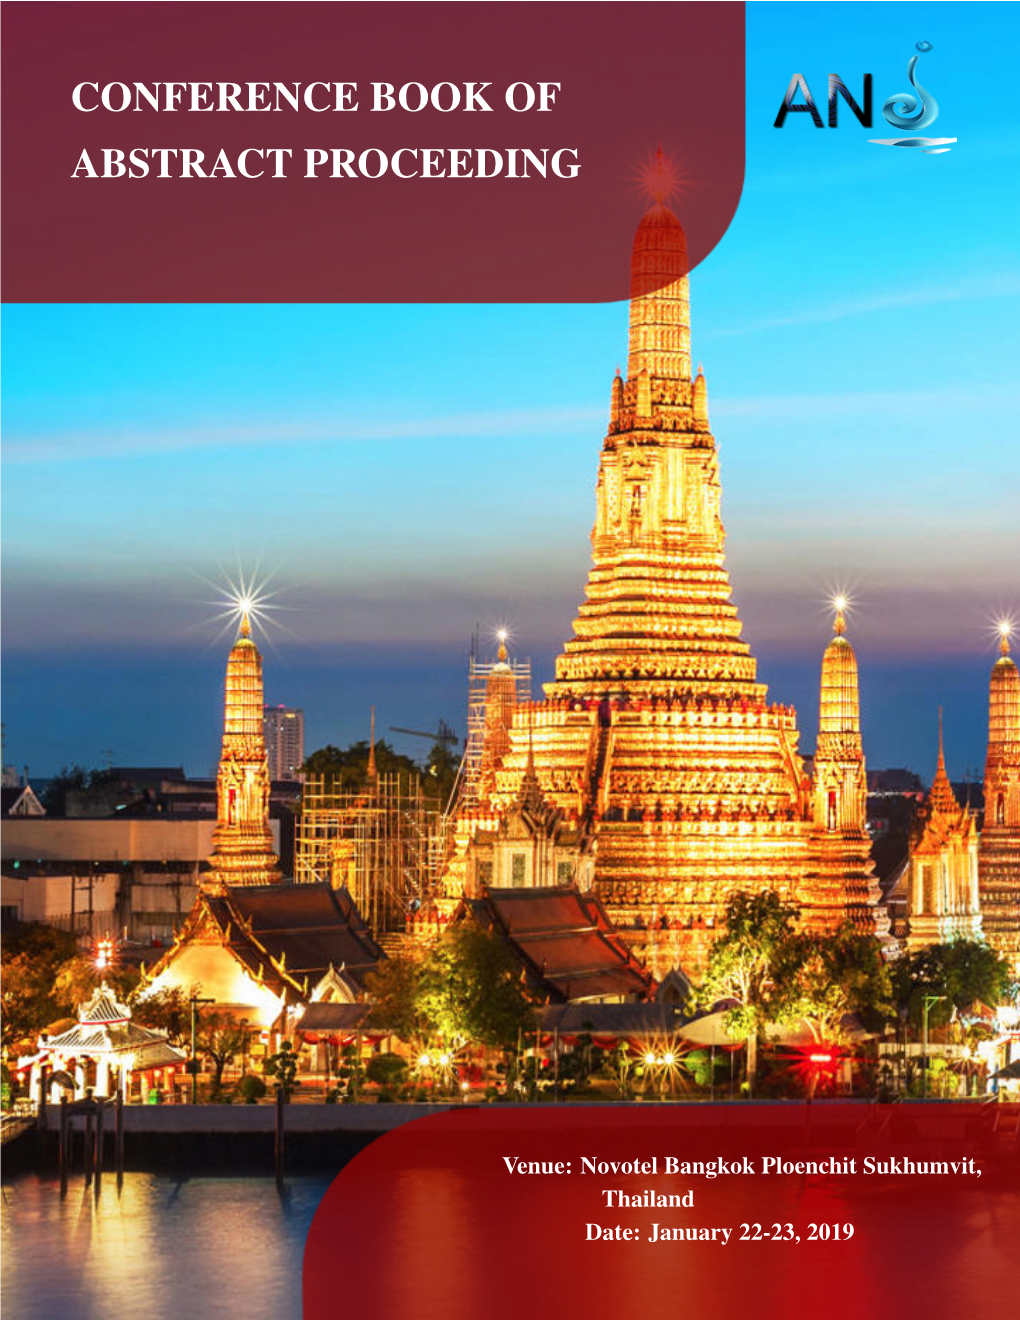 Bangkok, Thailand Abstract Proceeding January 22-23, 2019